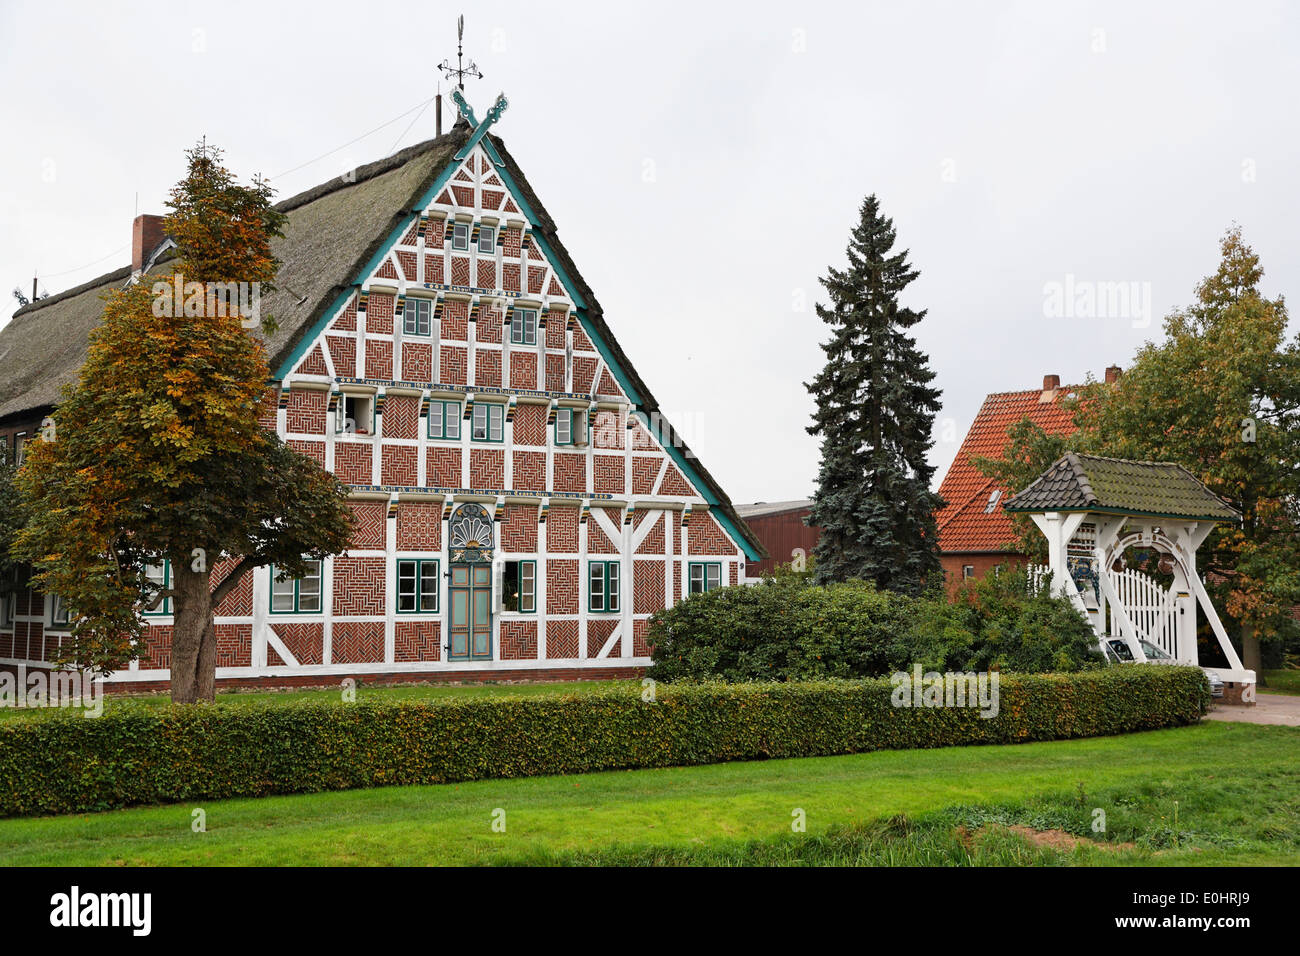 Allemagne, Basse-Saxe, maison de ferme typique, Deutschland, Allemagne, Hambourg, Nahe, Altes Land typisches Farmhaus Banque D'Images